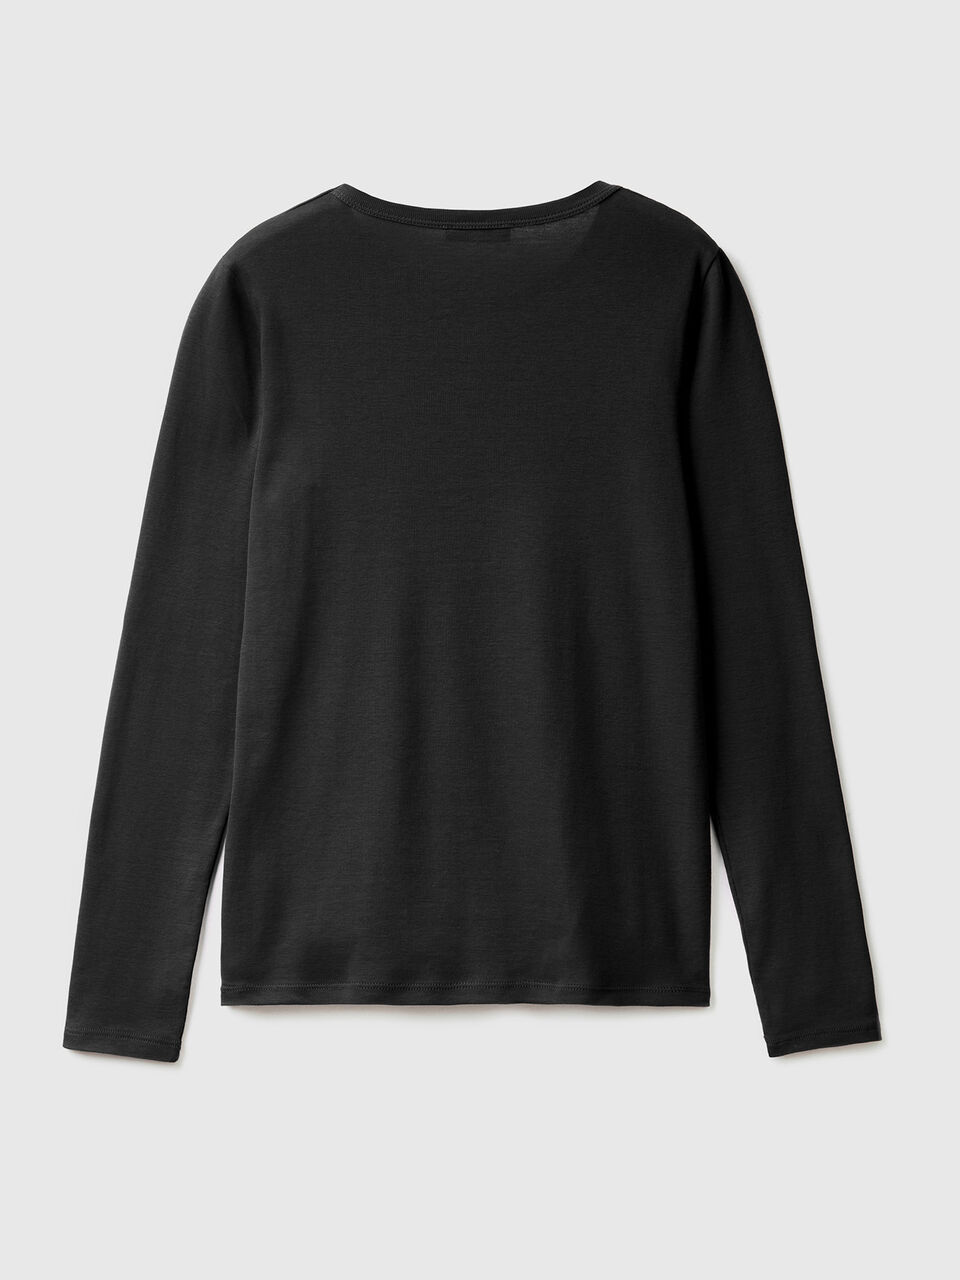 | cotton - Black 100% t-shirt Benetton long Black sleeve